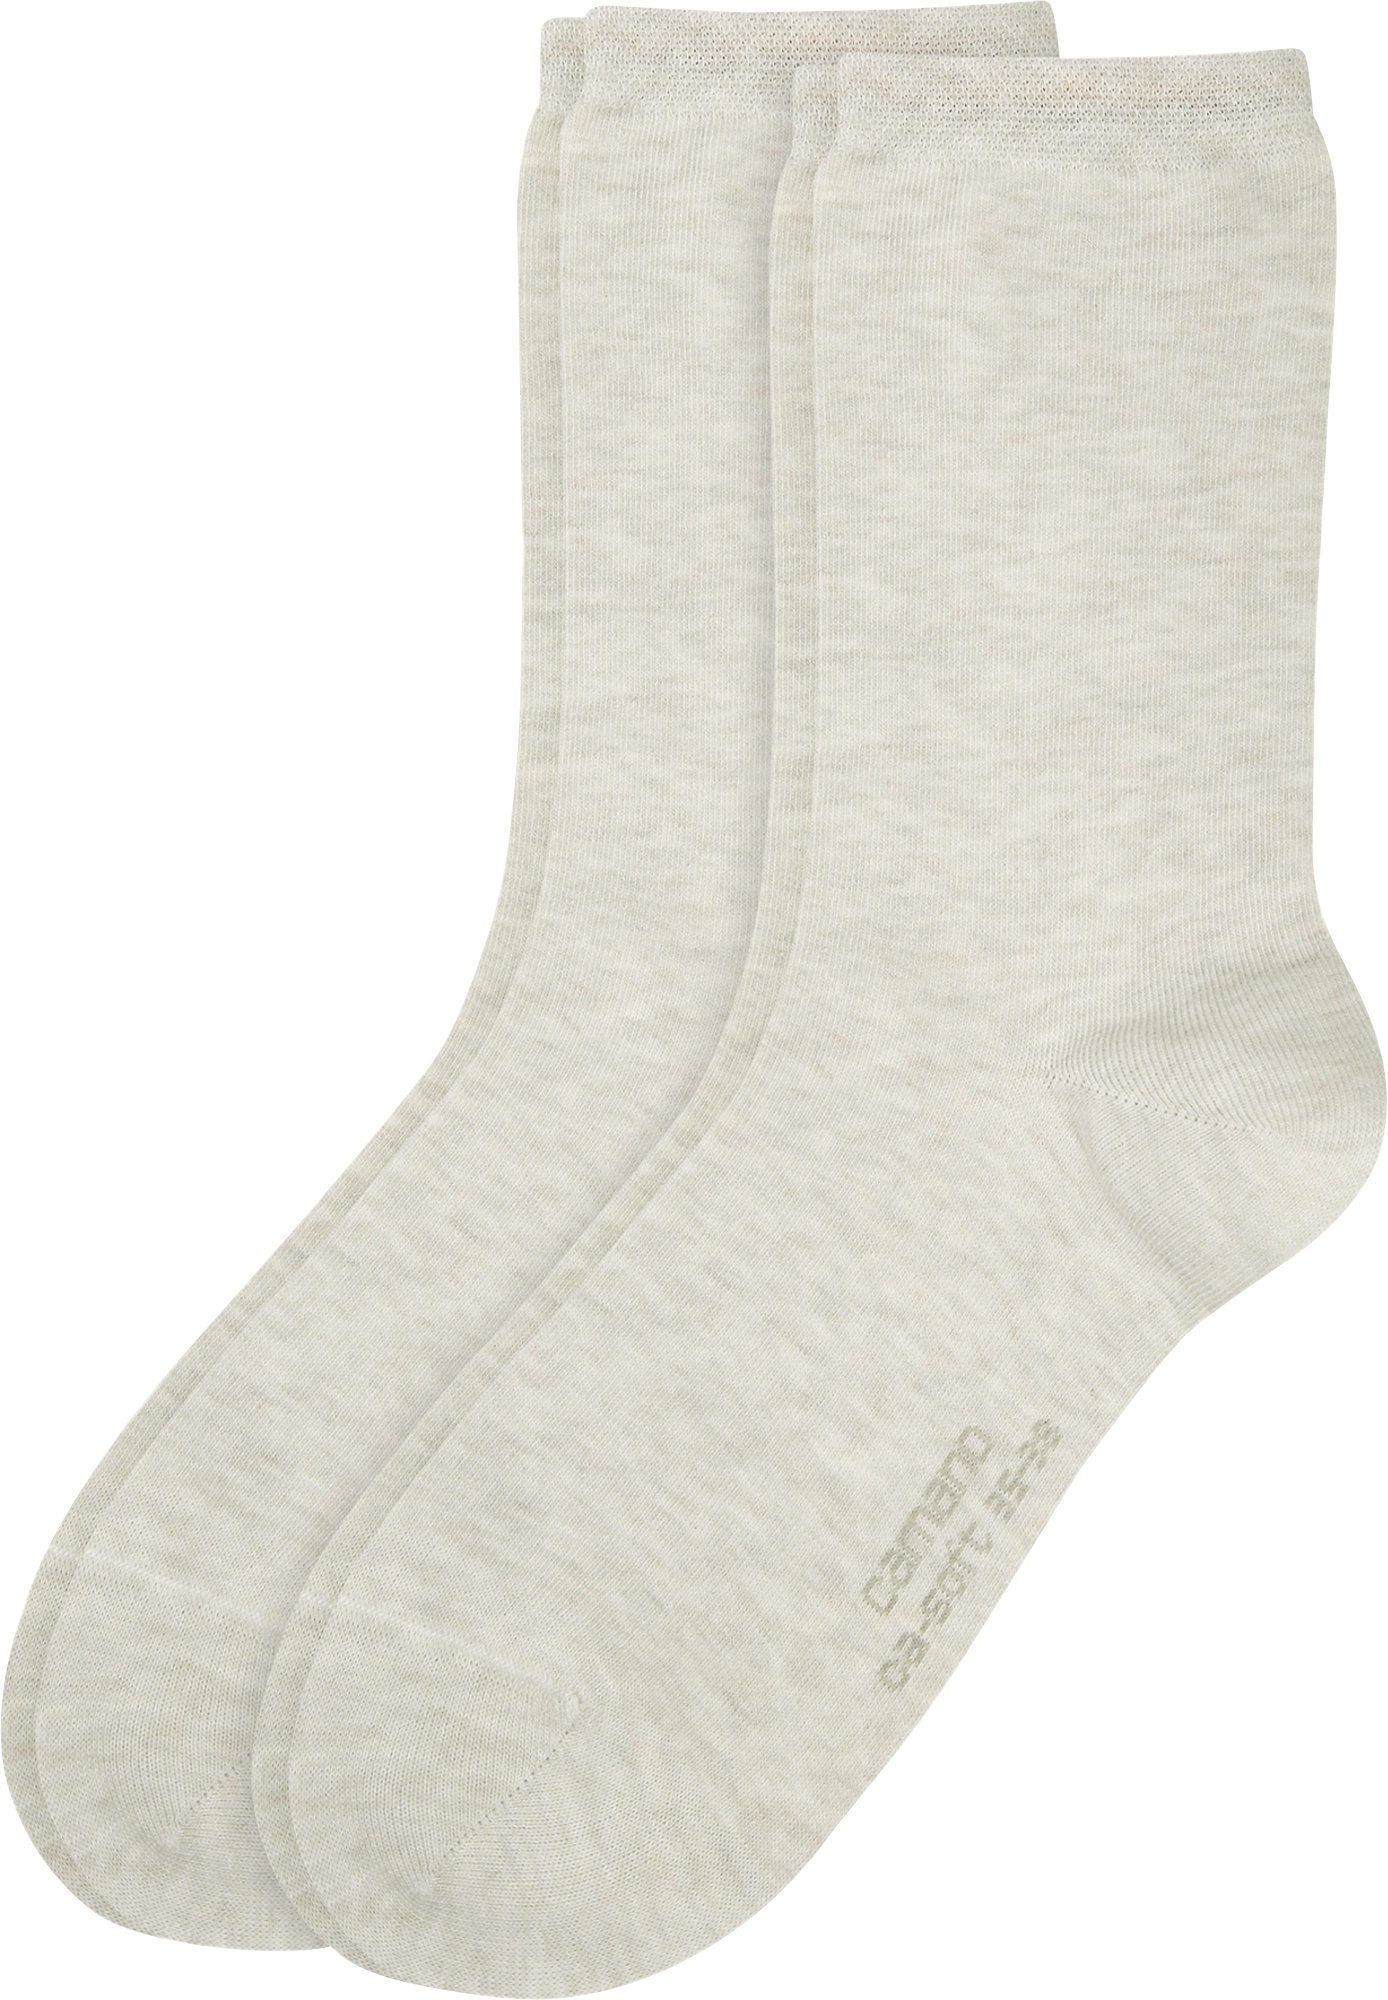 Camano Socken Damen-Socken 2 Paar Uni natur-melange